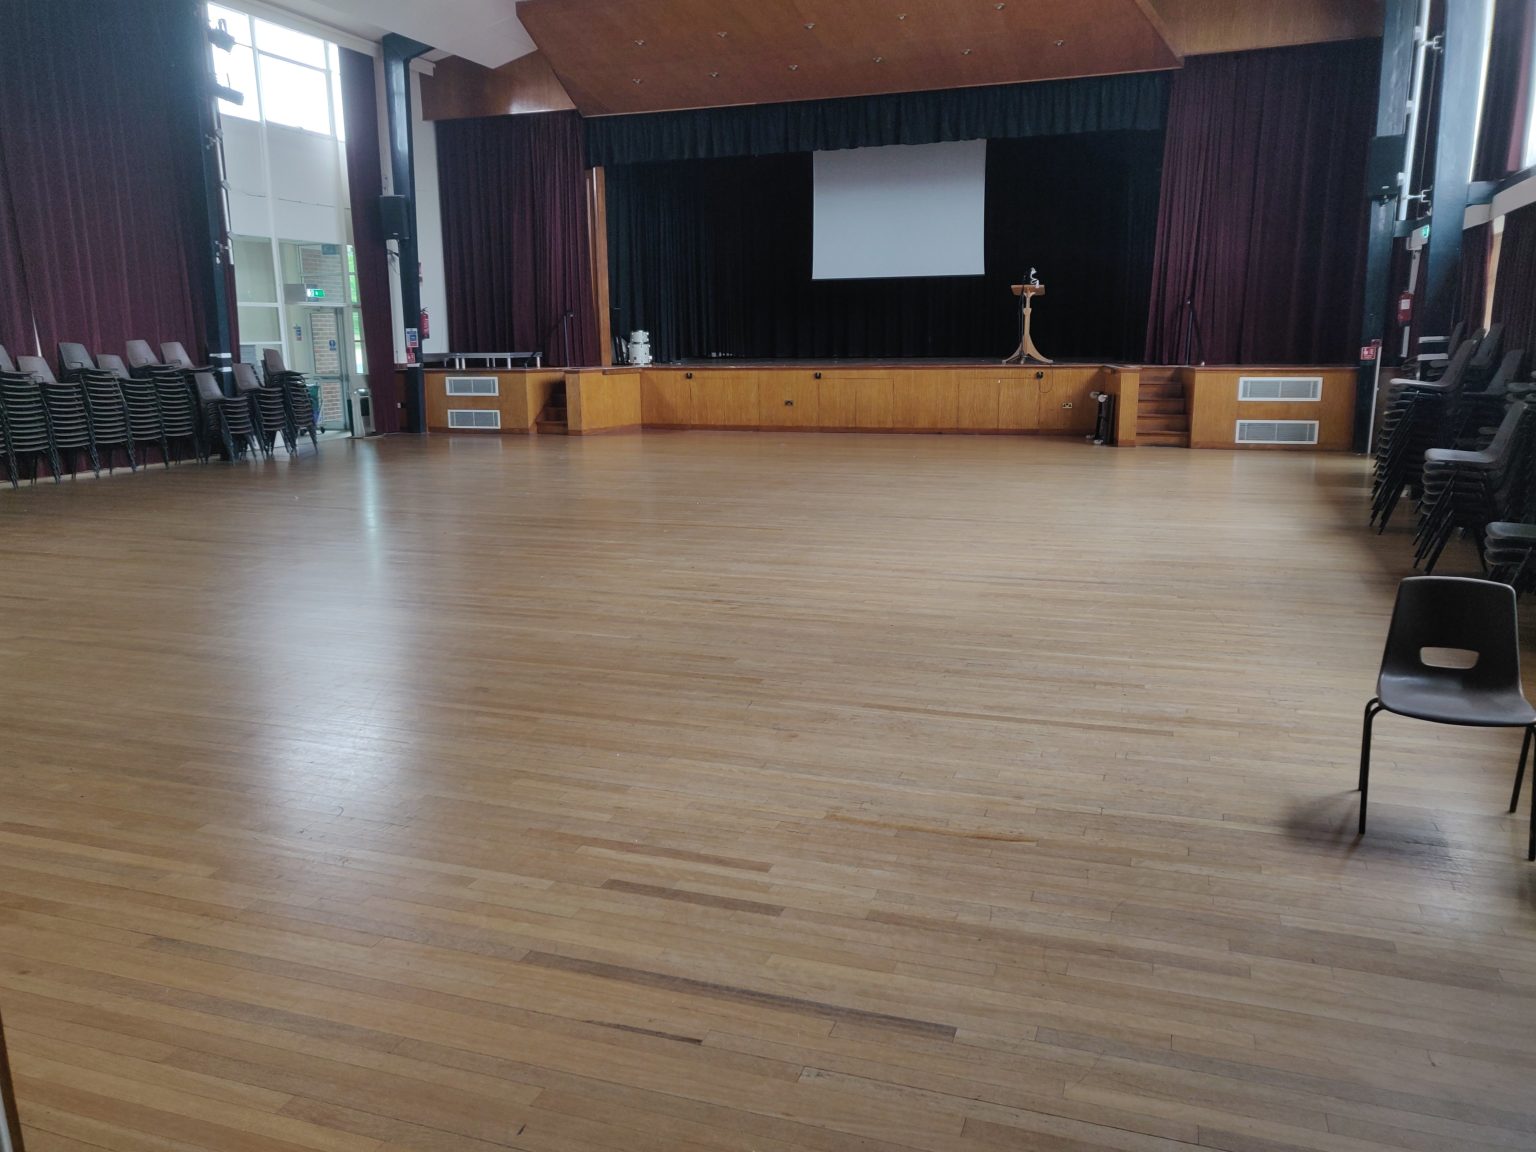 Main Hall at Parkstone Grammar School